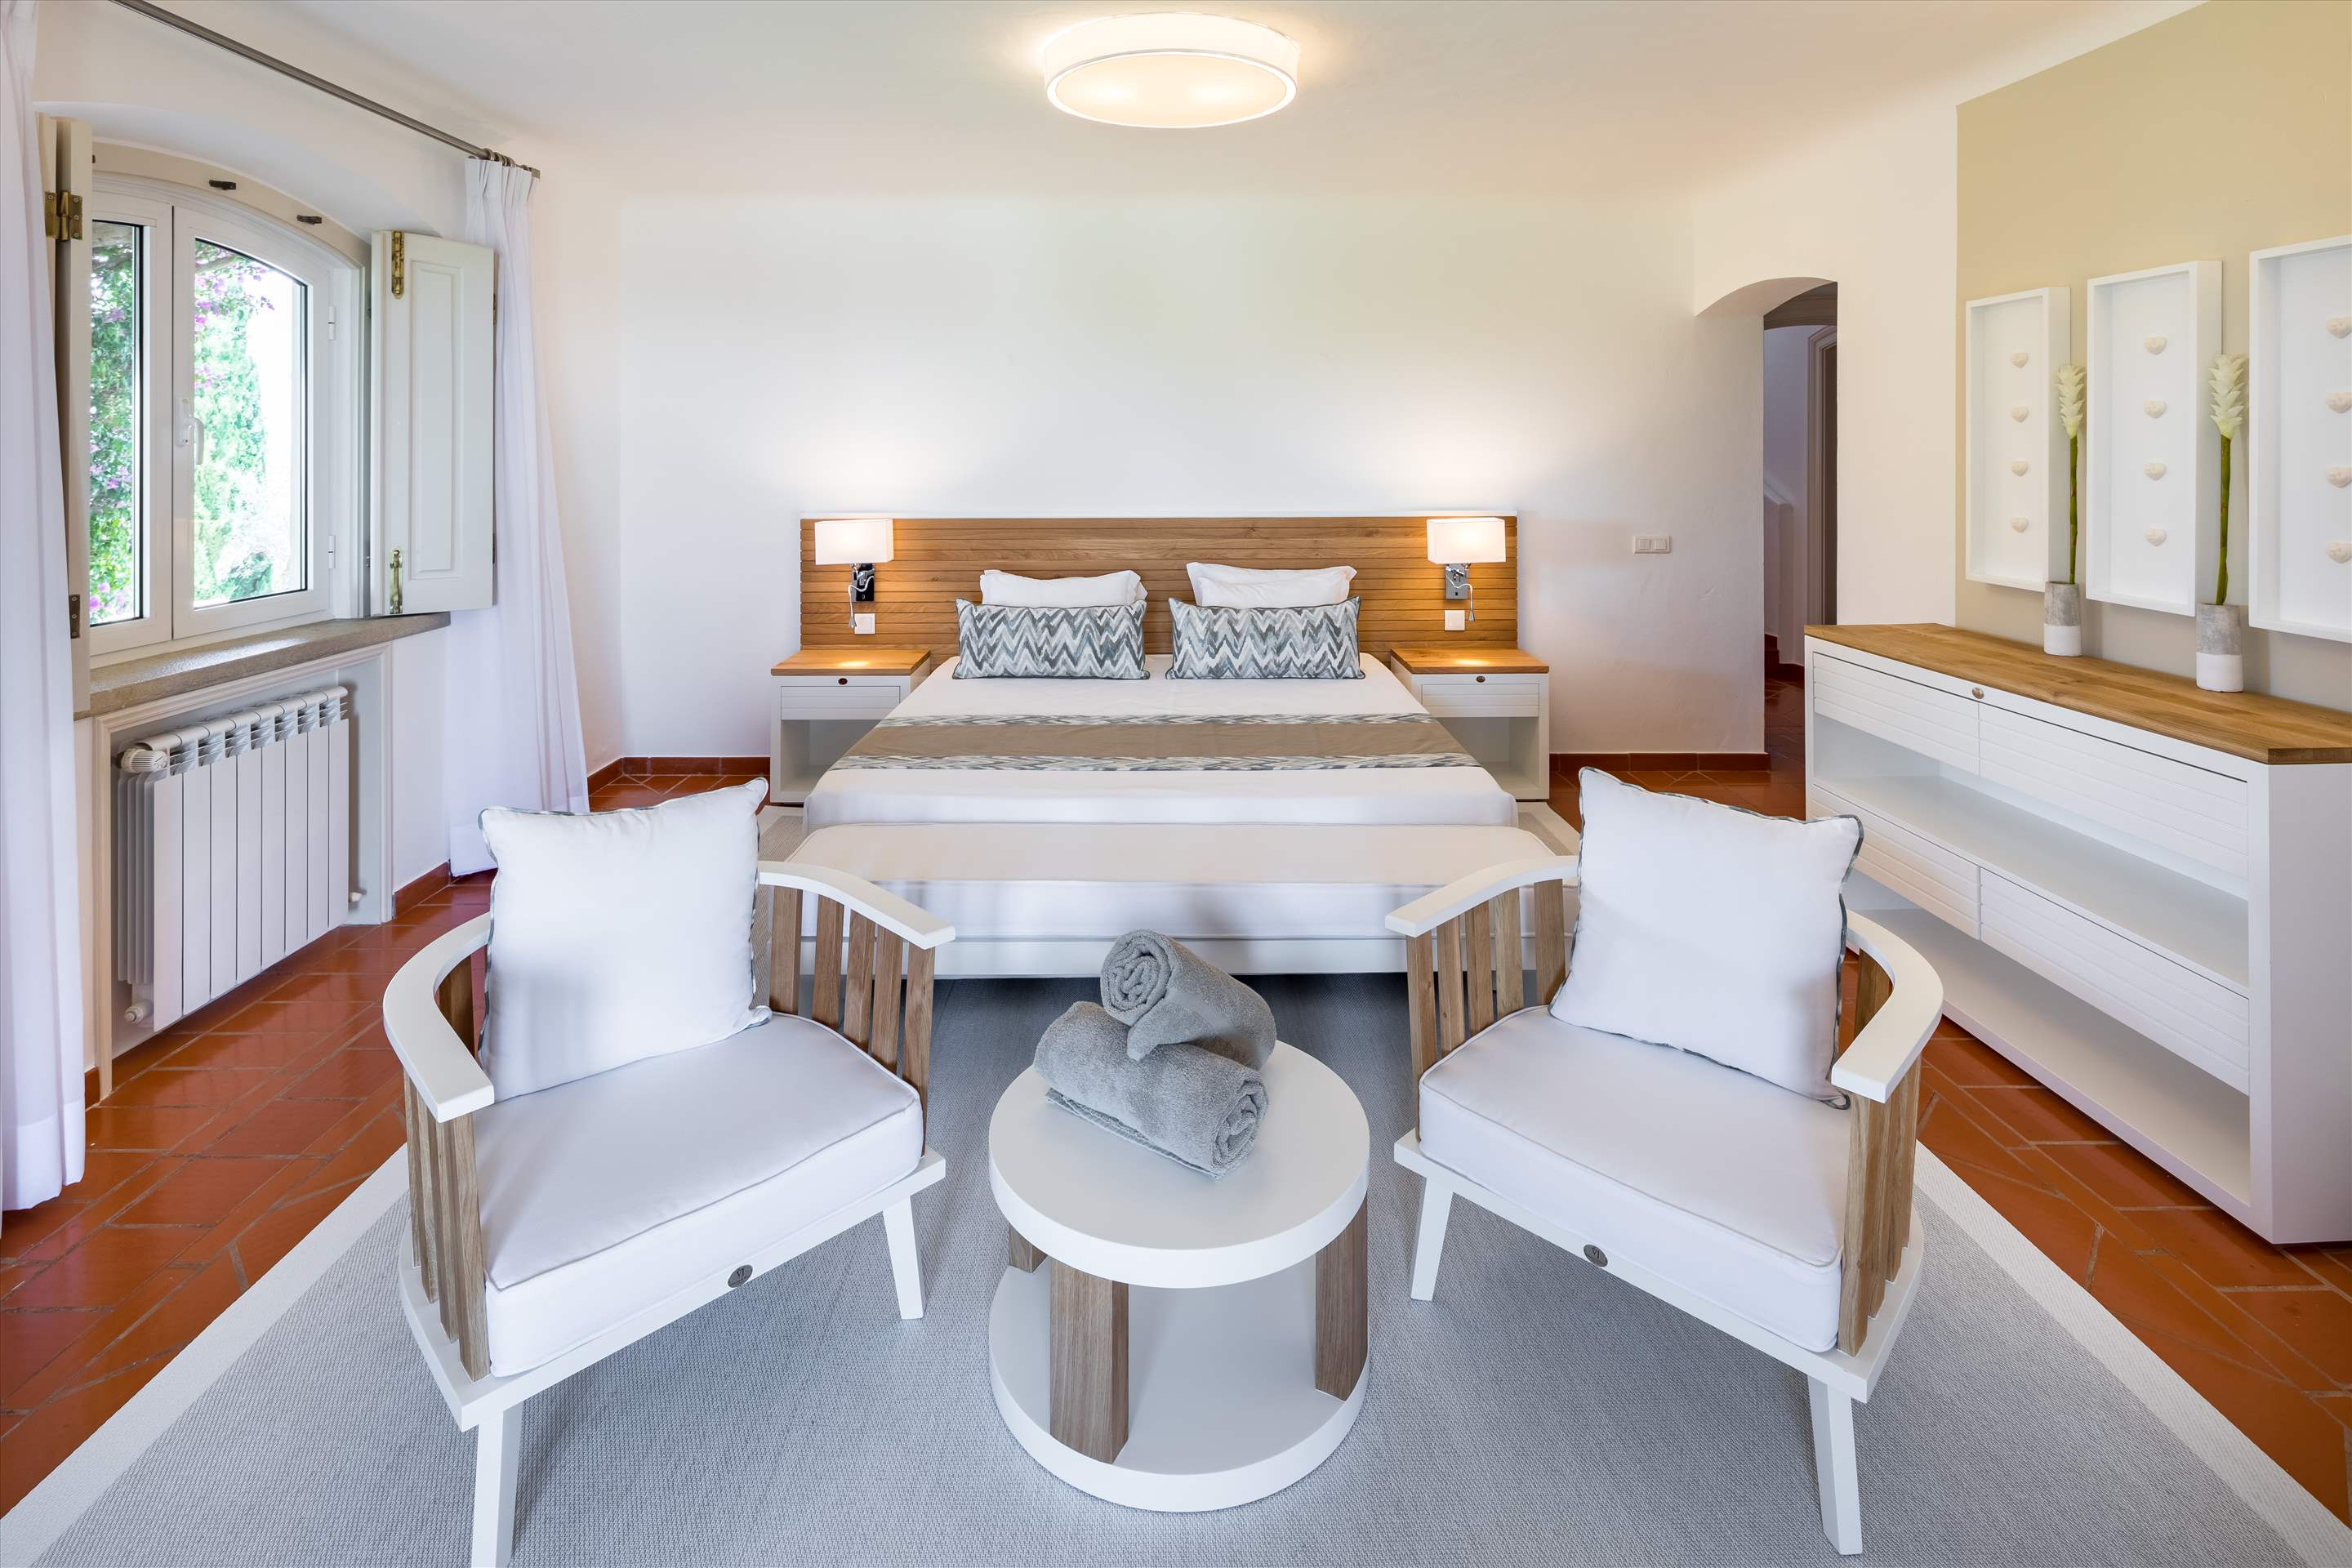 Casa da Montanha, 13-14 persons, 8 bedroom villa in Vilamoura Area, Algarve Photo #31